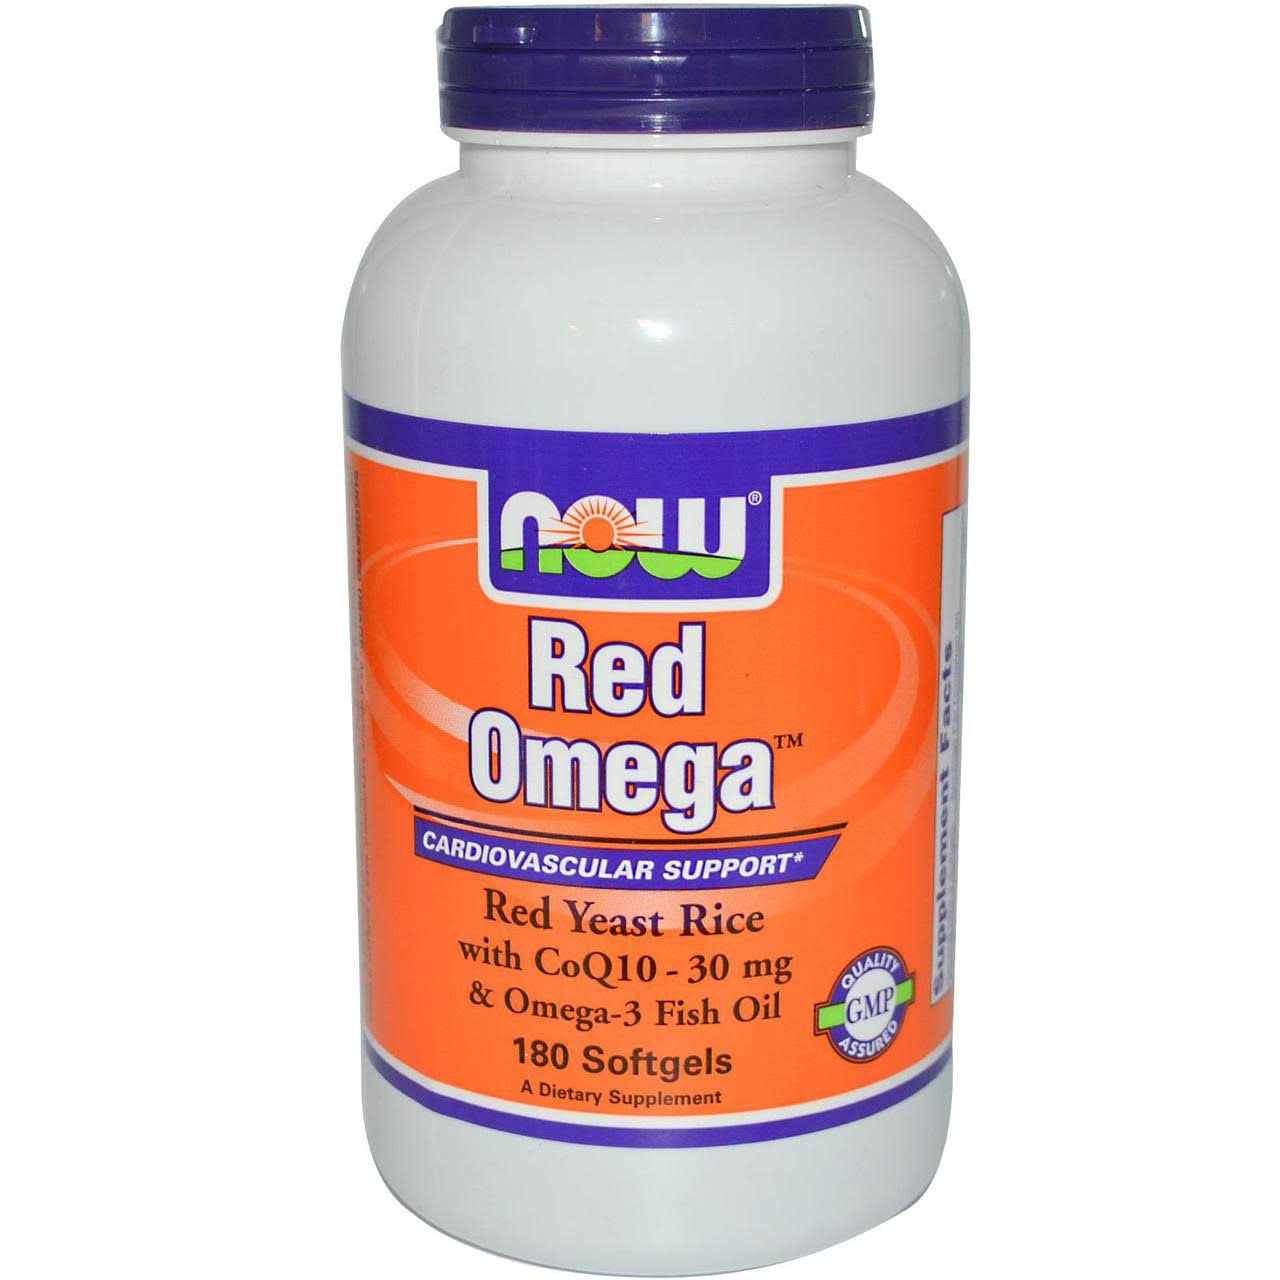 Now Foods Red Omega - 180 softgels